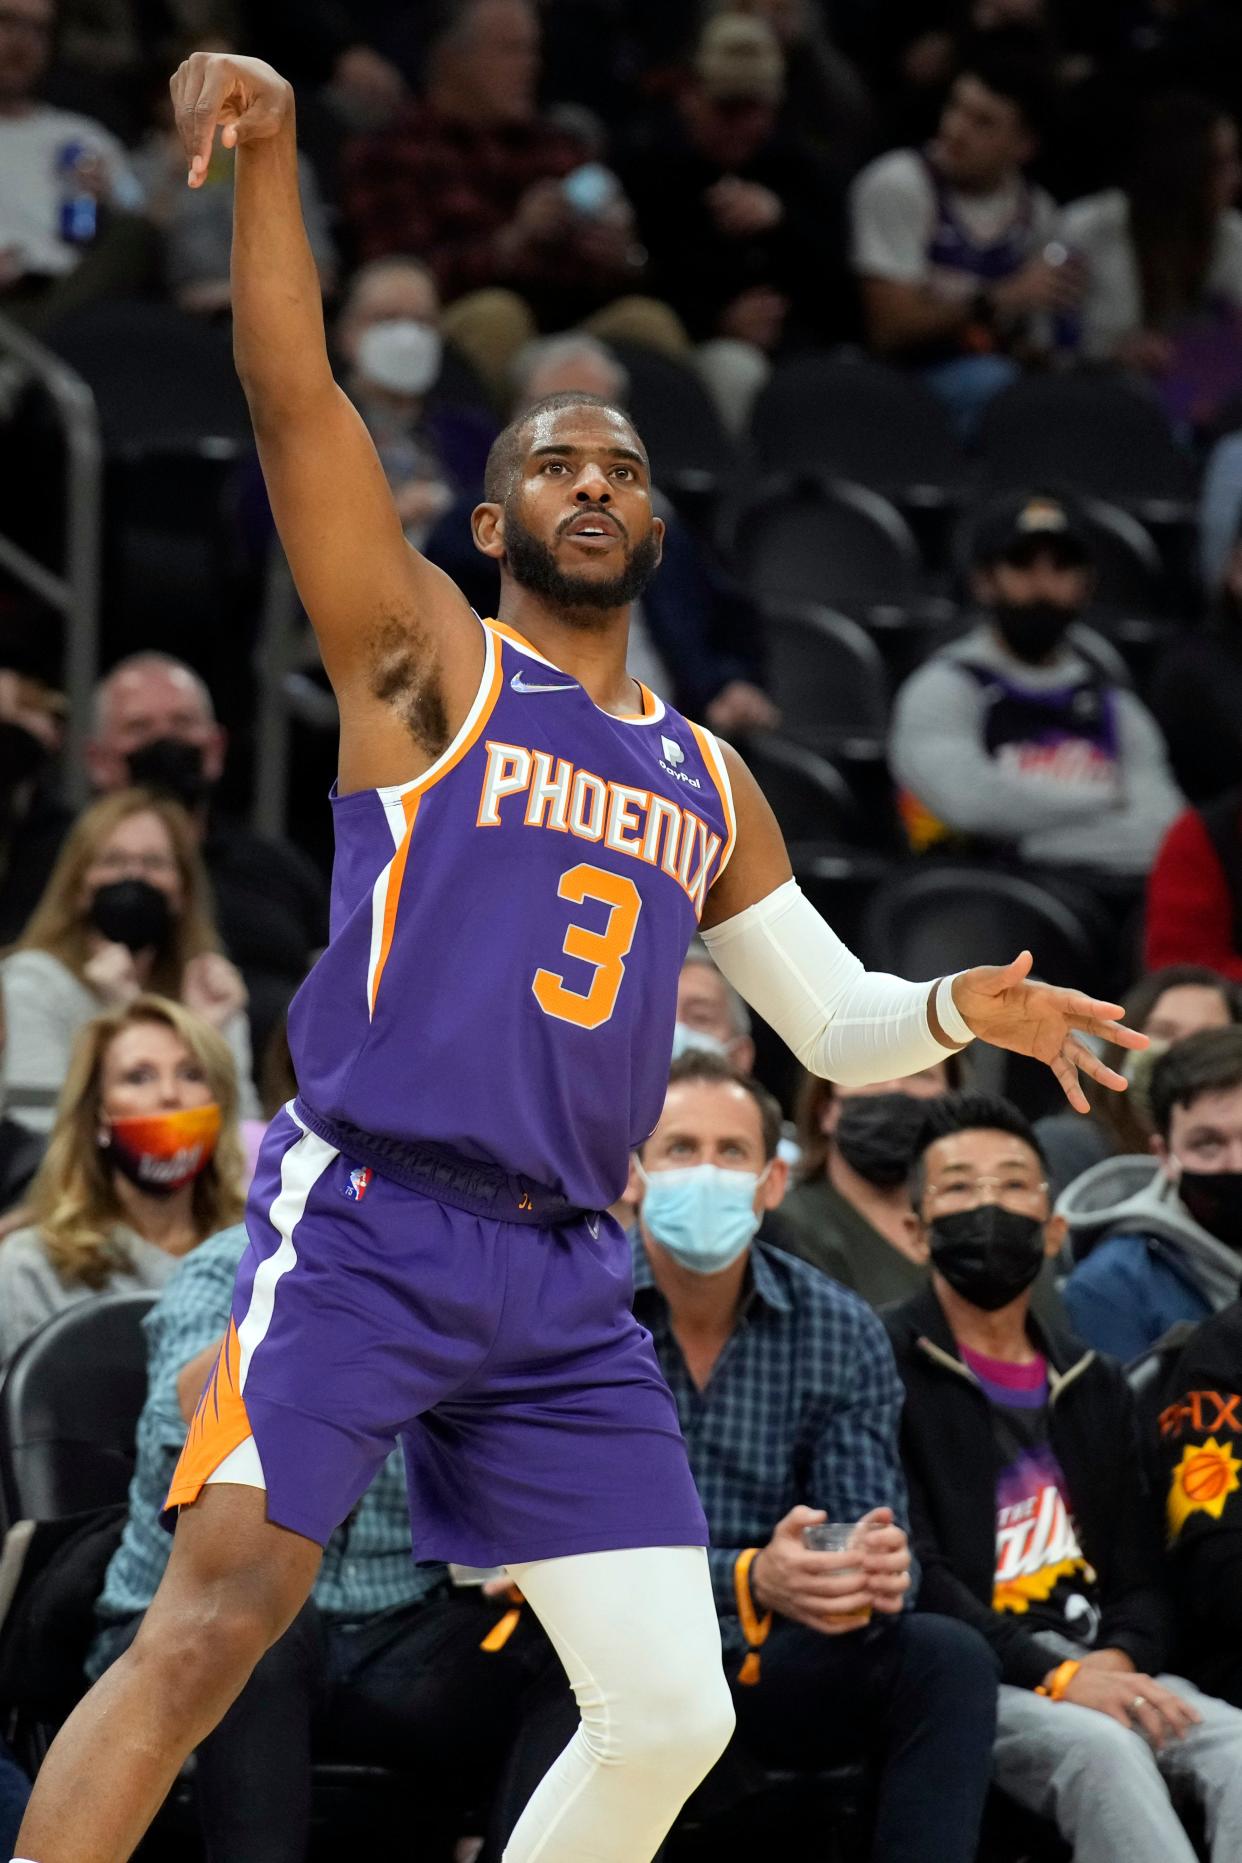 Feb 16, 2022; Phoenix, Arizona, USA; Phoenix Suns guard Chris Paul (3) reacts after scoring against the Houston Rockets at Footprint Center. Mandatory Credit: Rick Scuteri-USA TODAY Sports